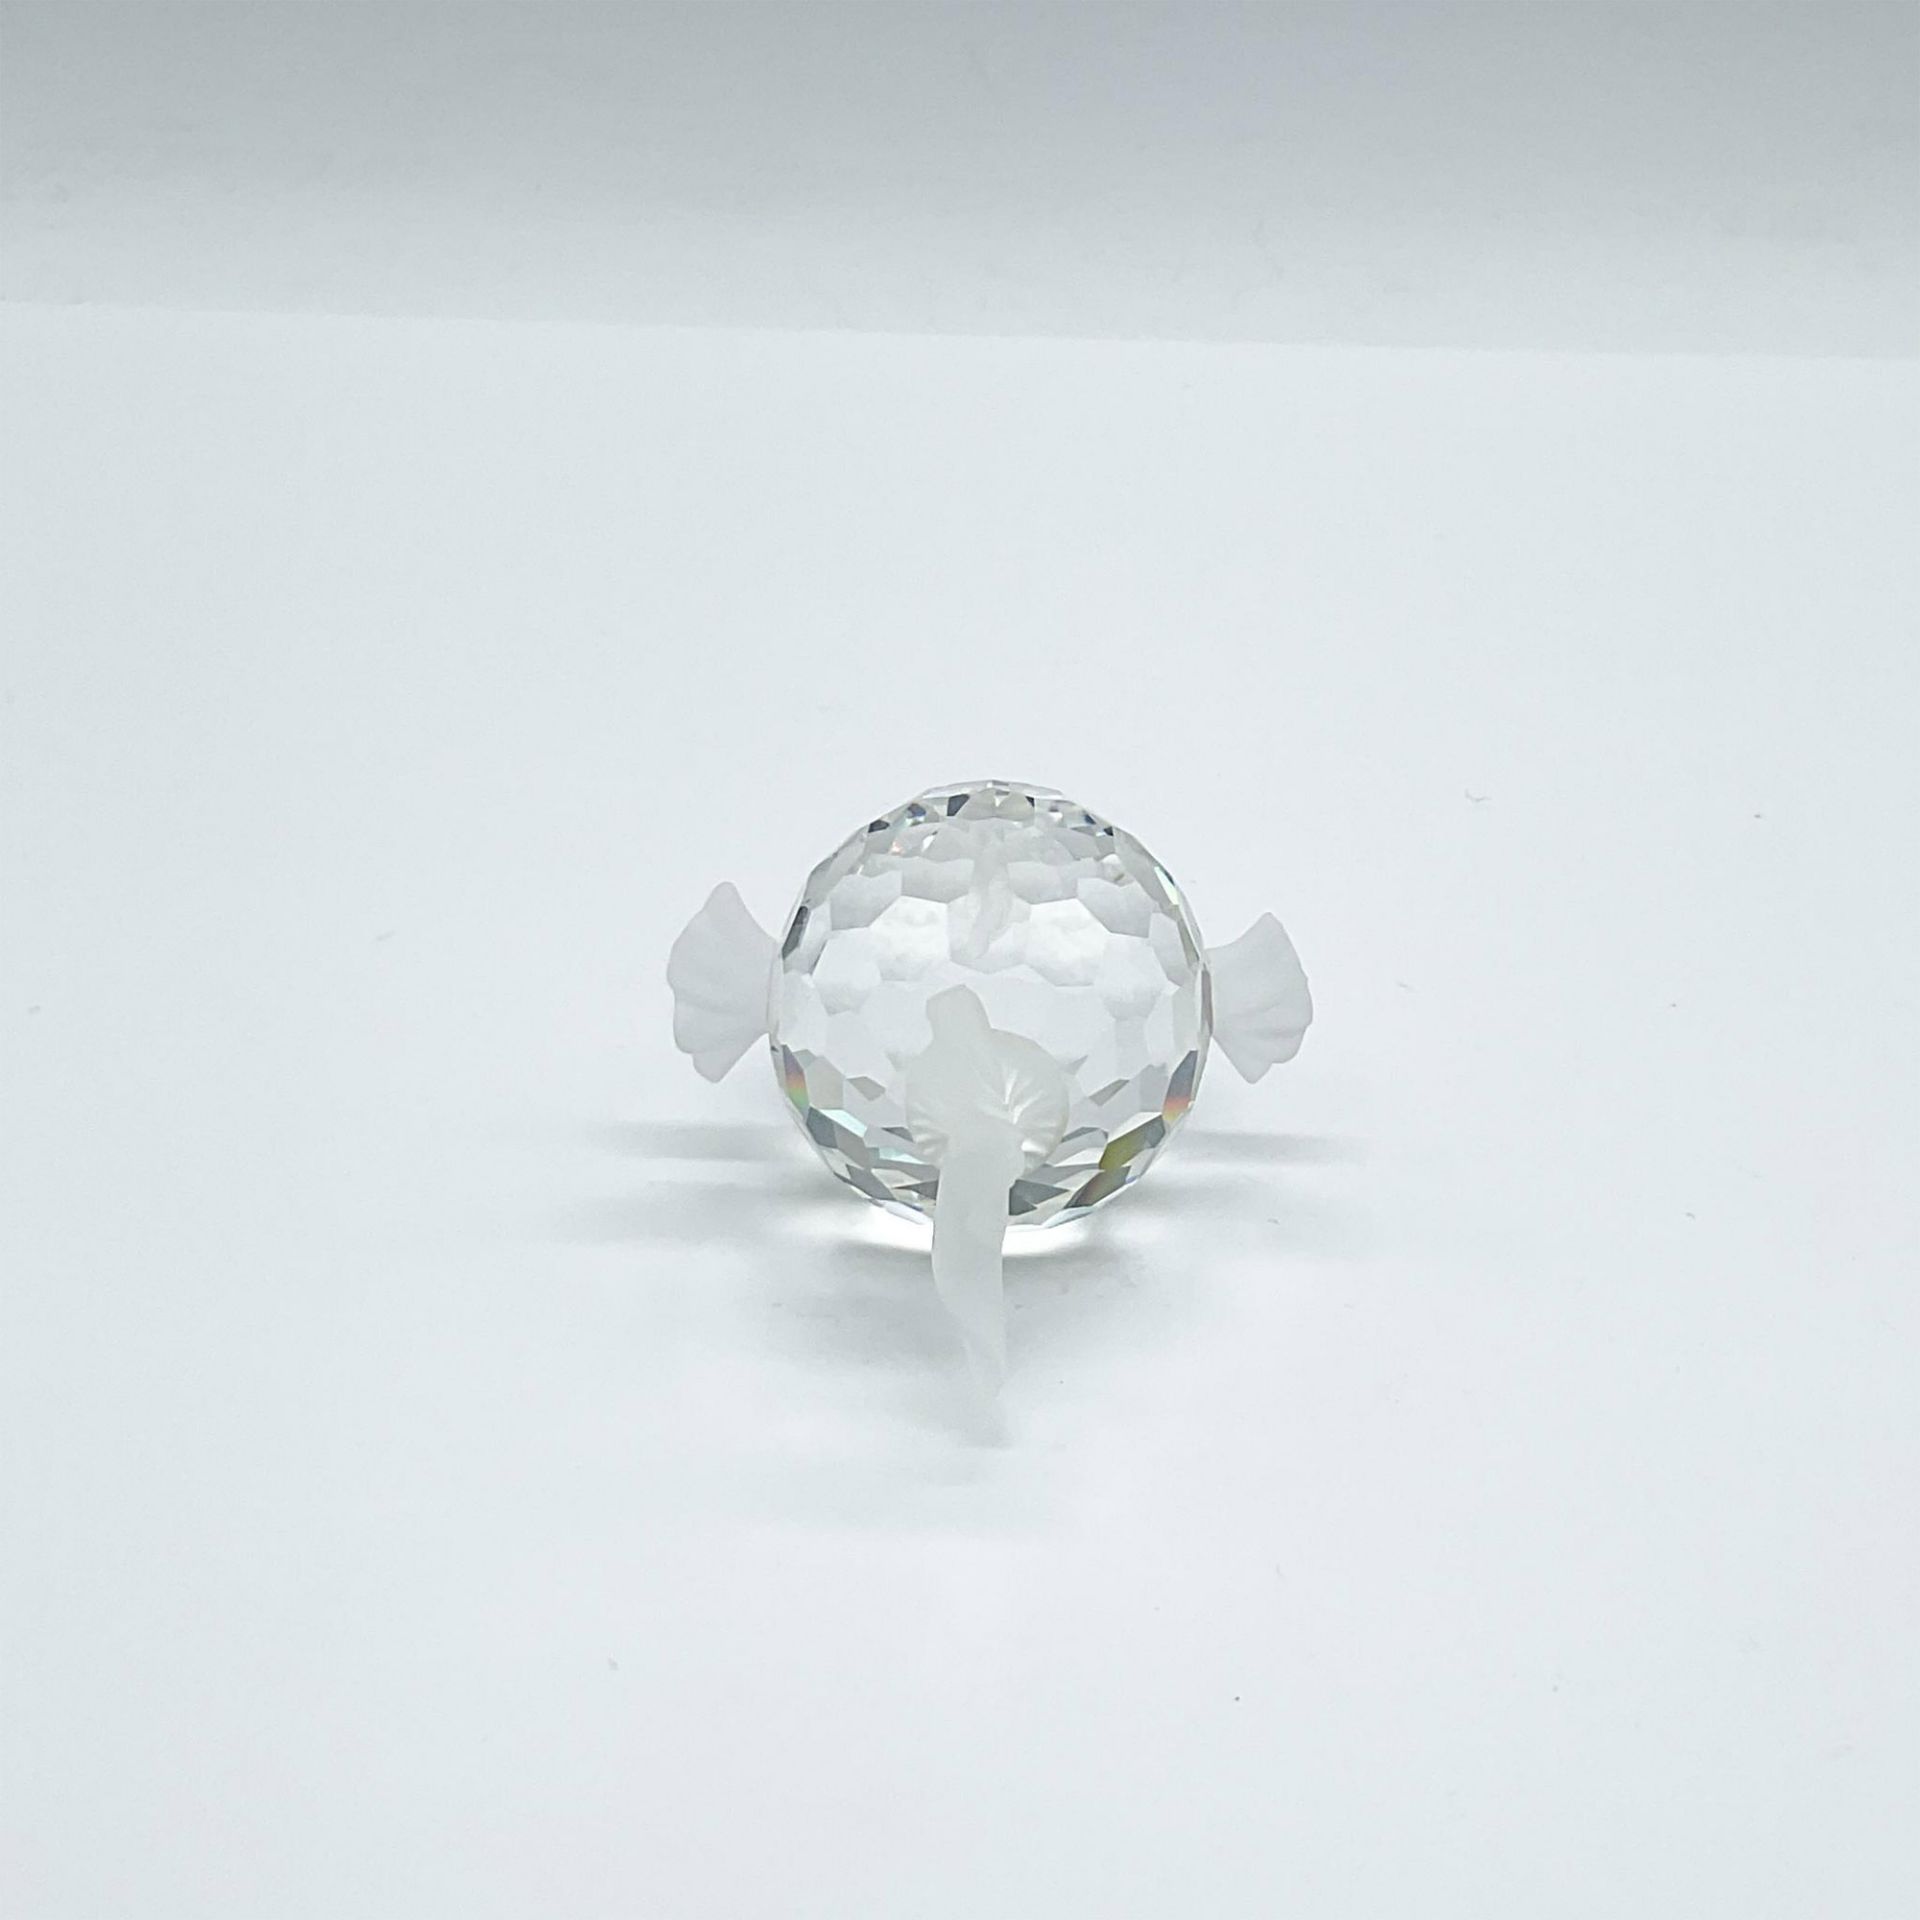 Swarovski Crystal Figurine, Blowfish - Image 2 of 4